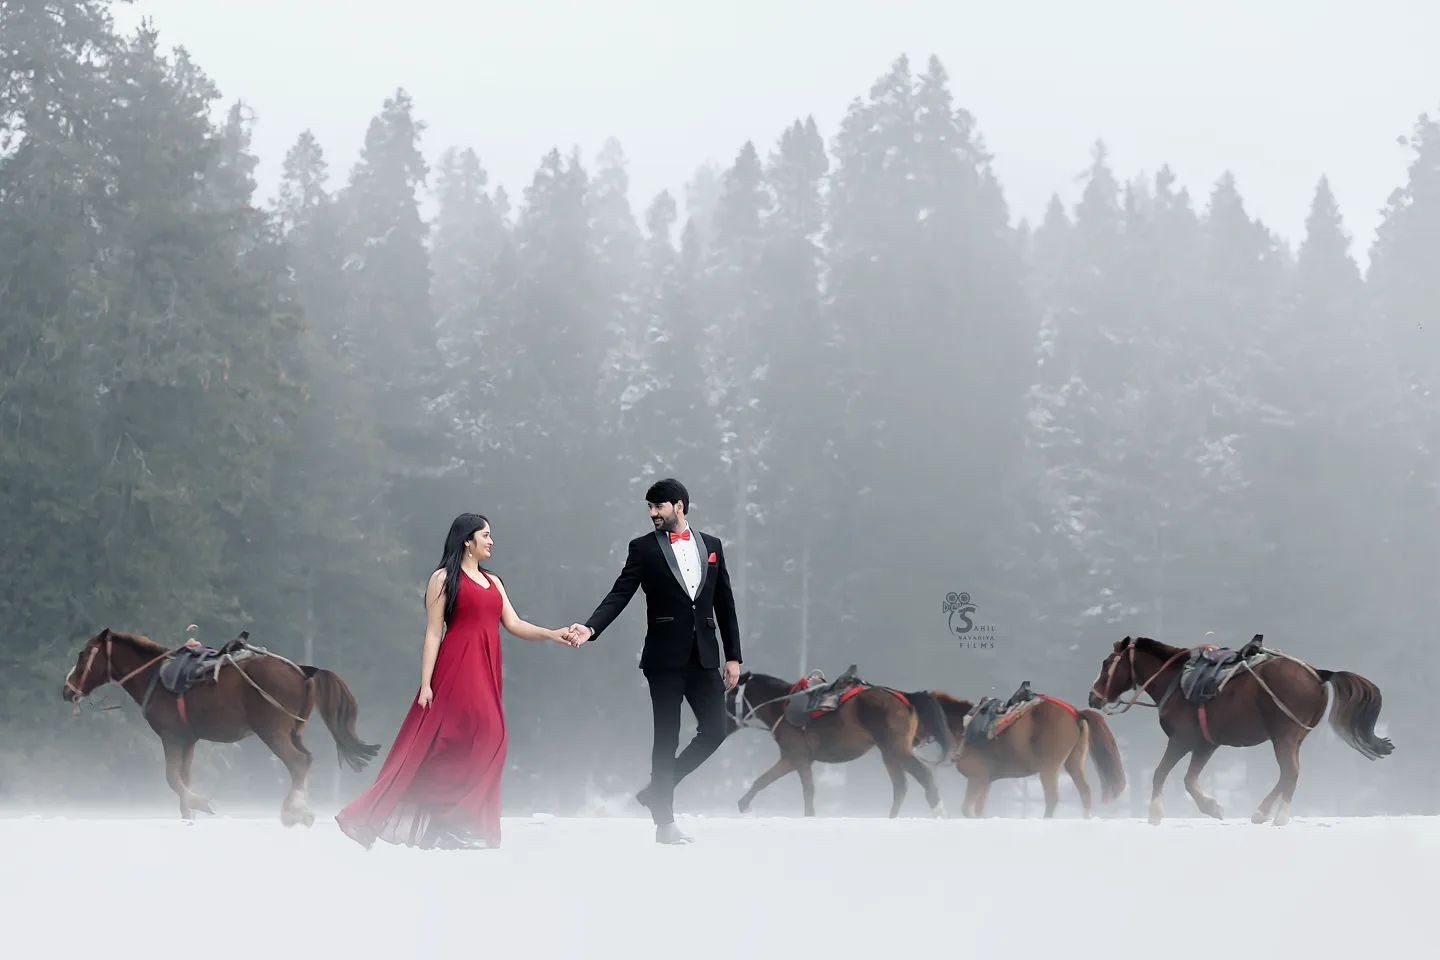 Dreamy Pre-Wedding Shoot Ideas With A Cosy Winter Theme